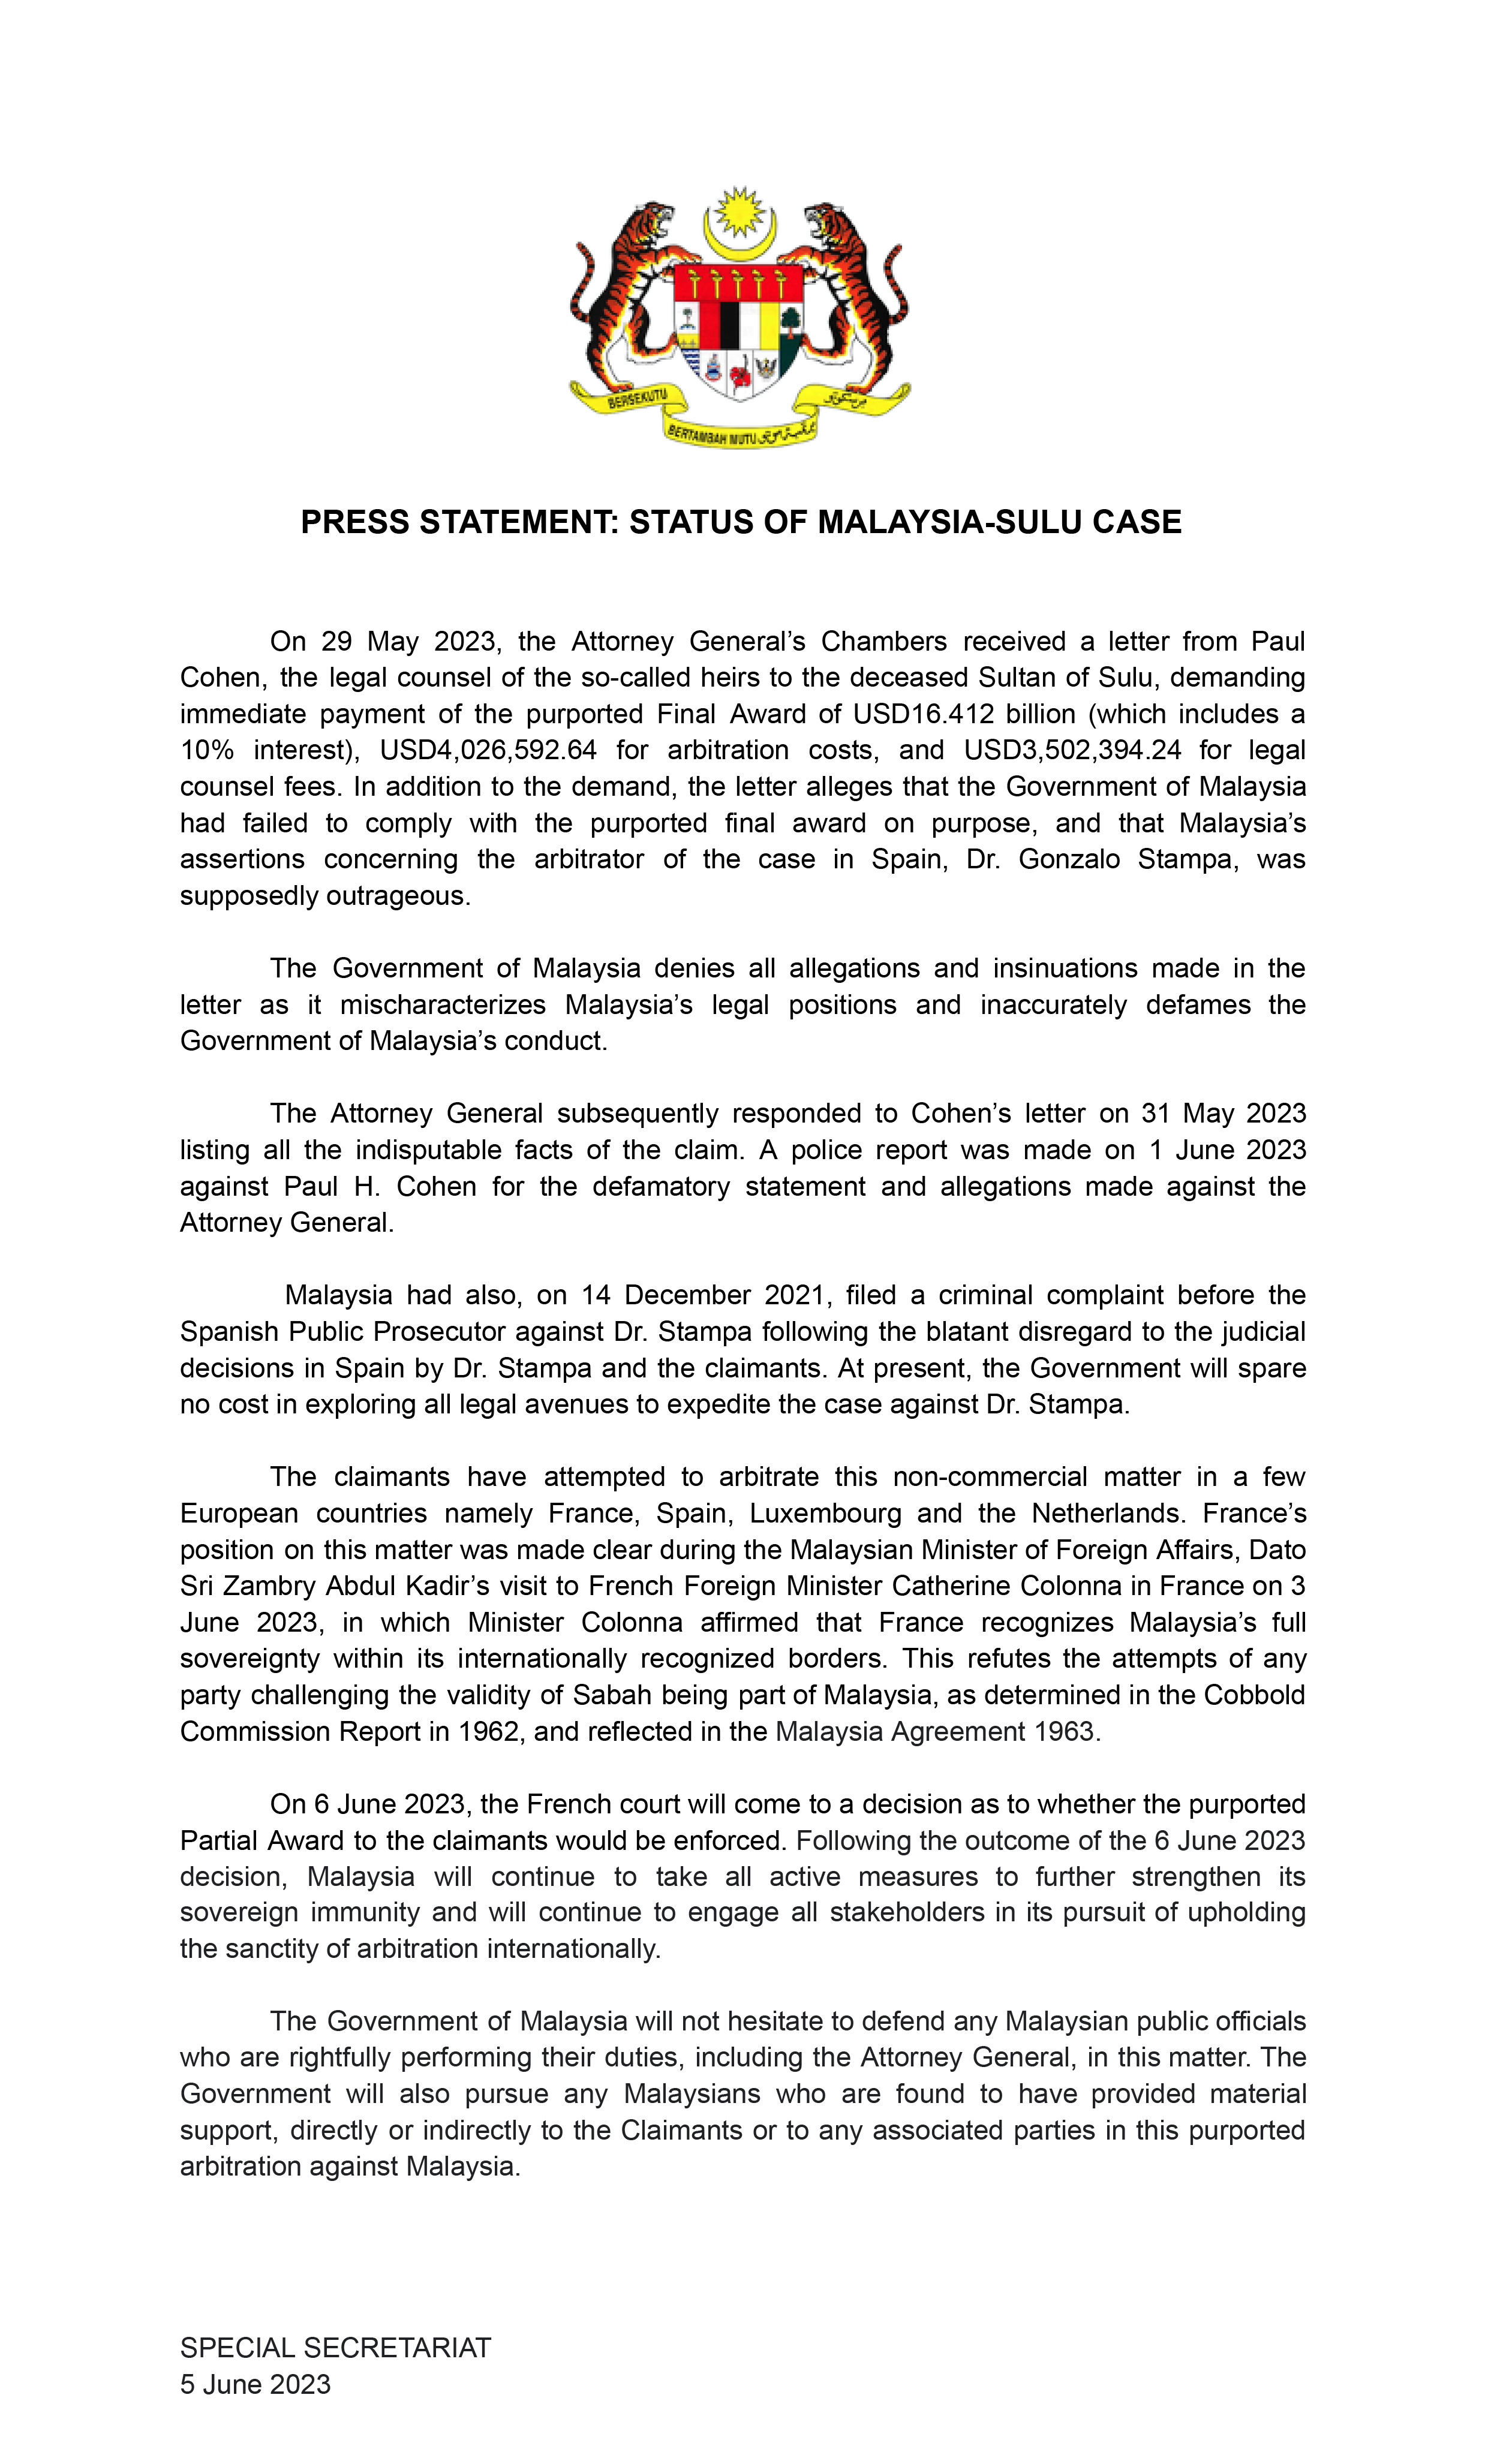 PRESS STATEMENT STATUS OF MALAYSIA SULU CASE 5 JUNE 2023